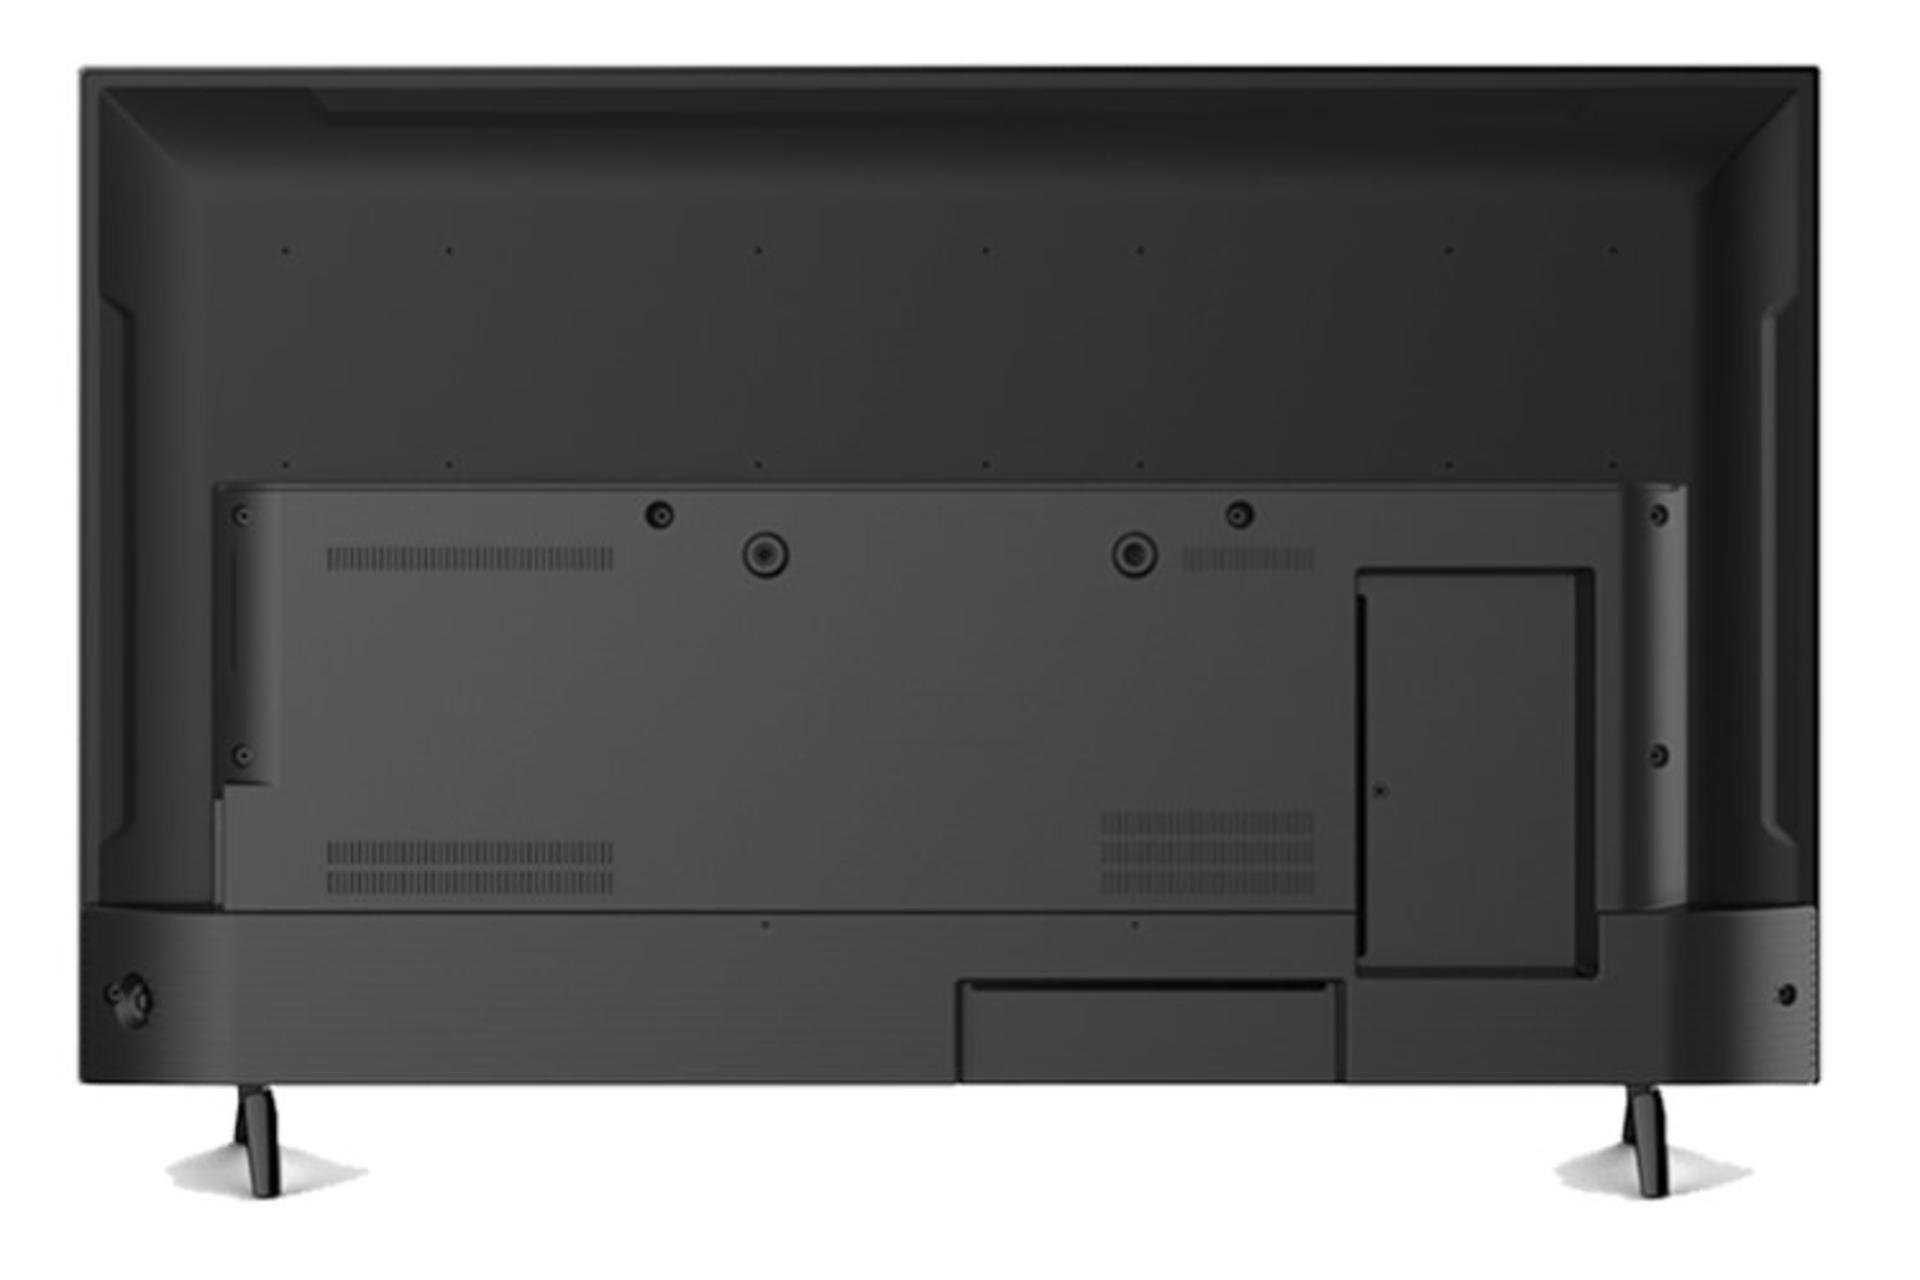 نمای پشت تلویزیون ایکس ویژن XK570 مدل 43 اینچ